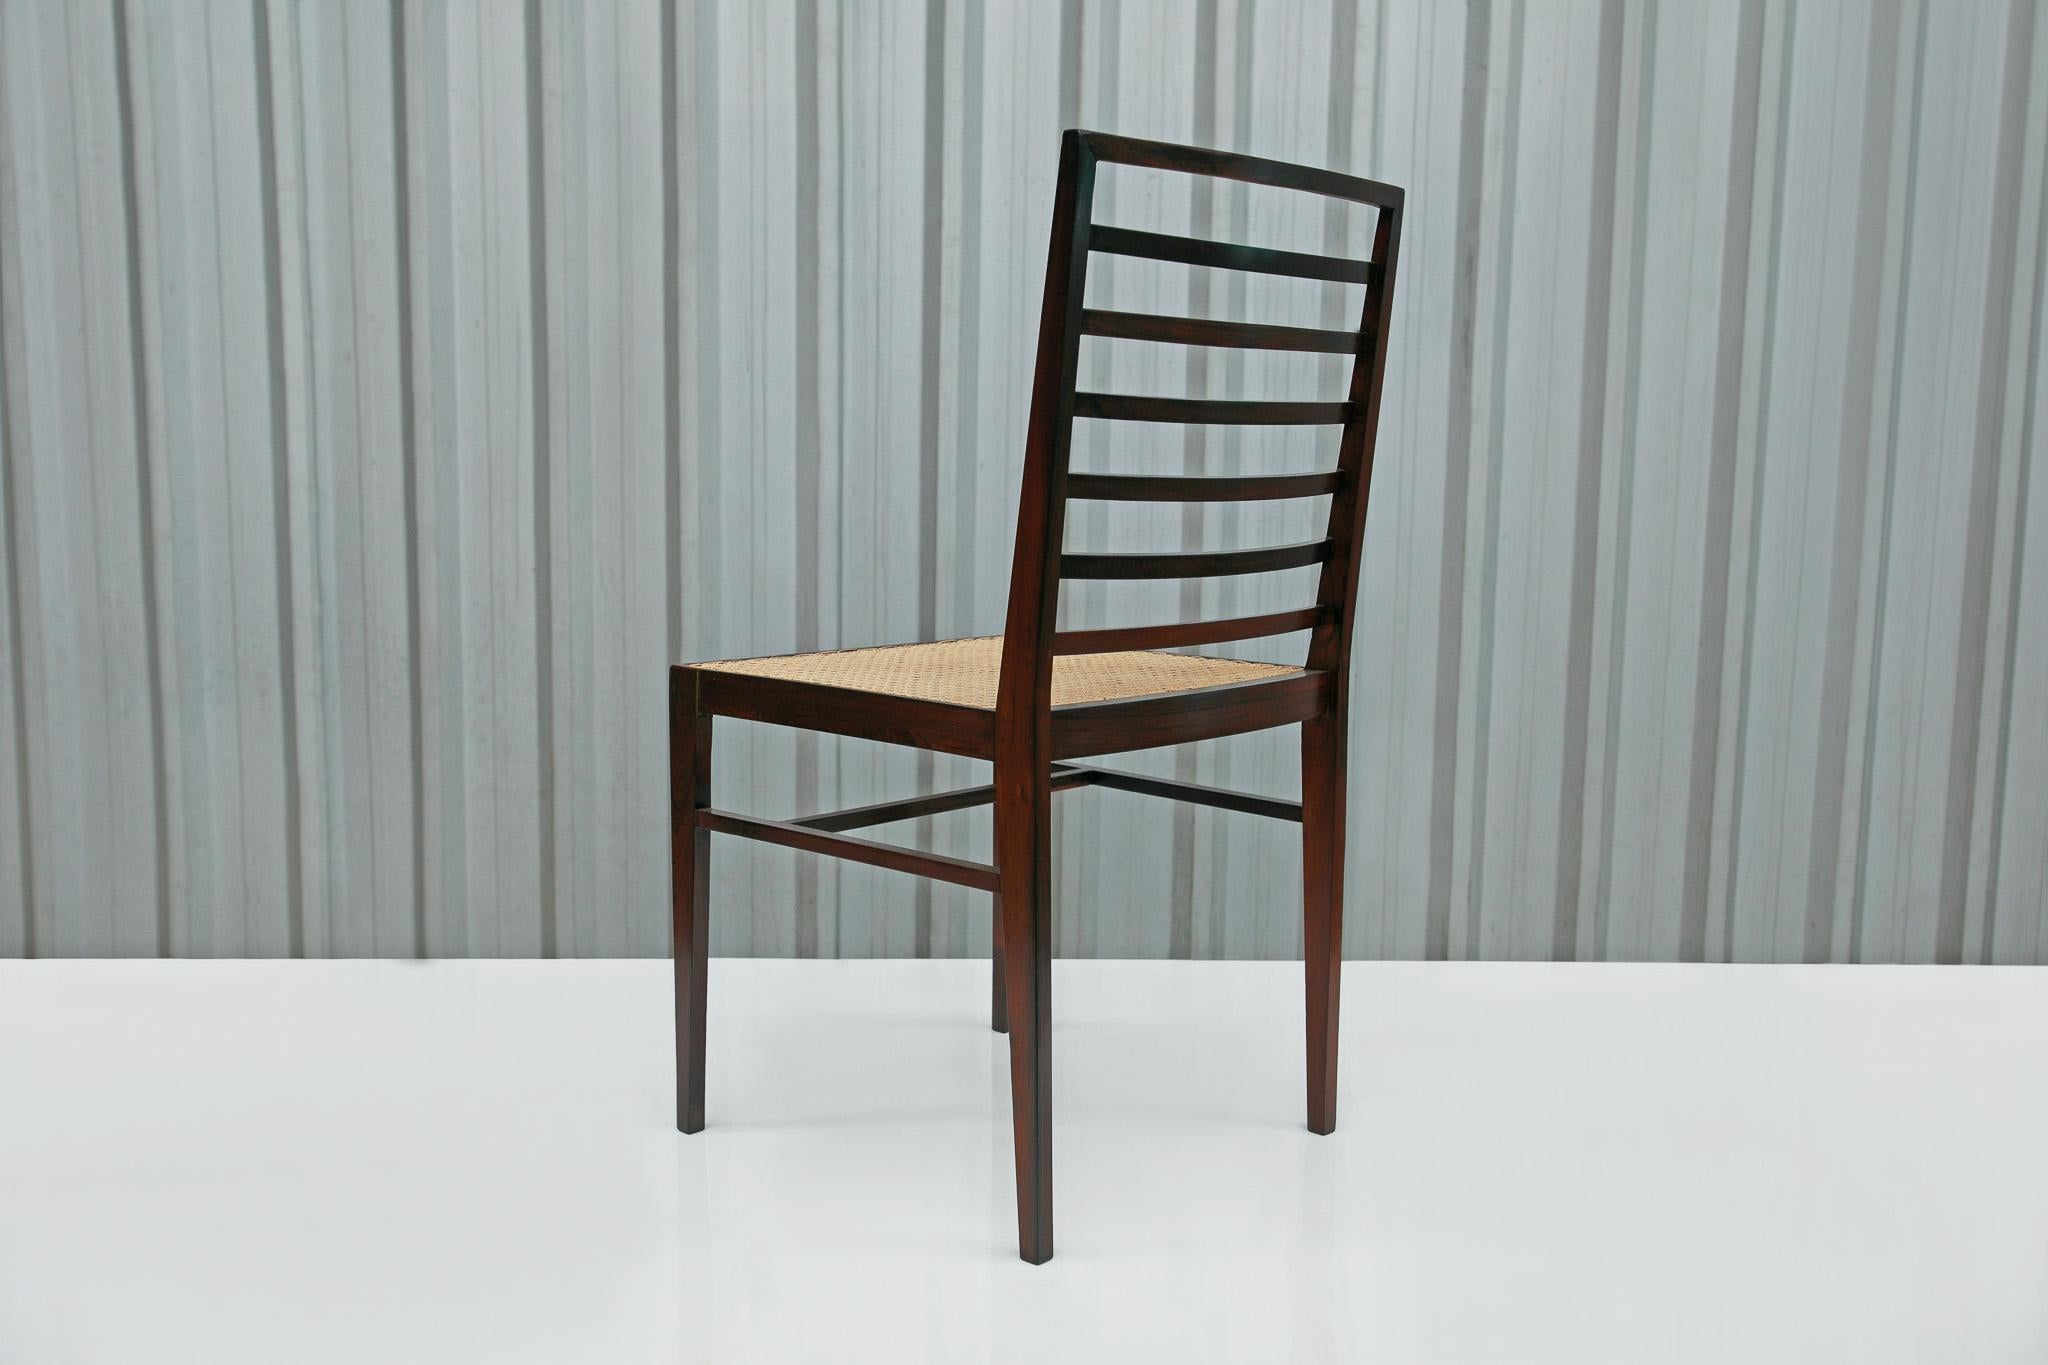 Woodwork Brazilian Modern 4 Chair Set in Hardwood & Cane, Joaquim Tenreiro, Brazil, 1950s For Sale